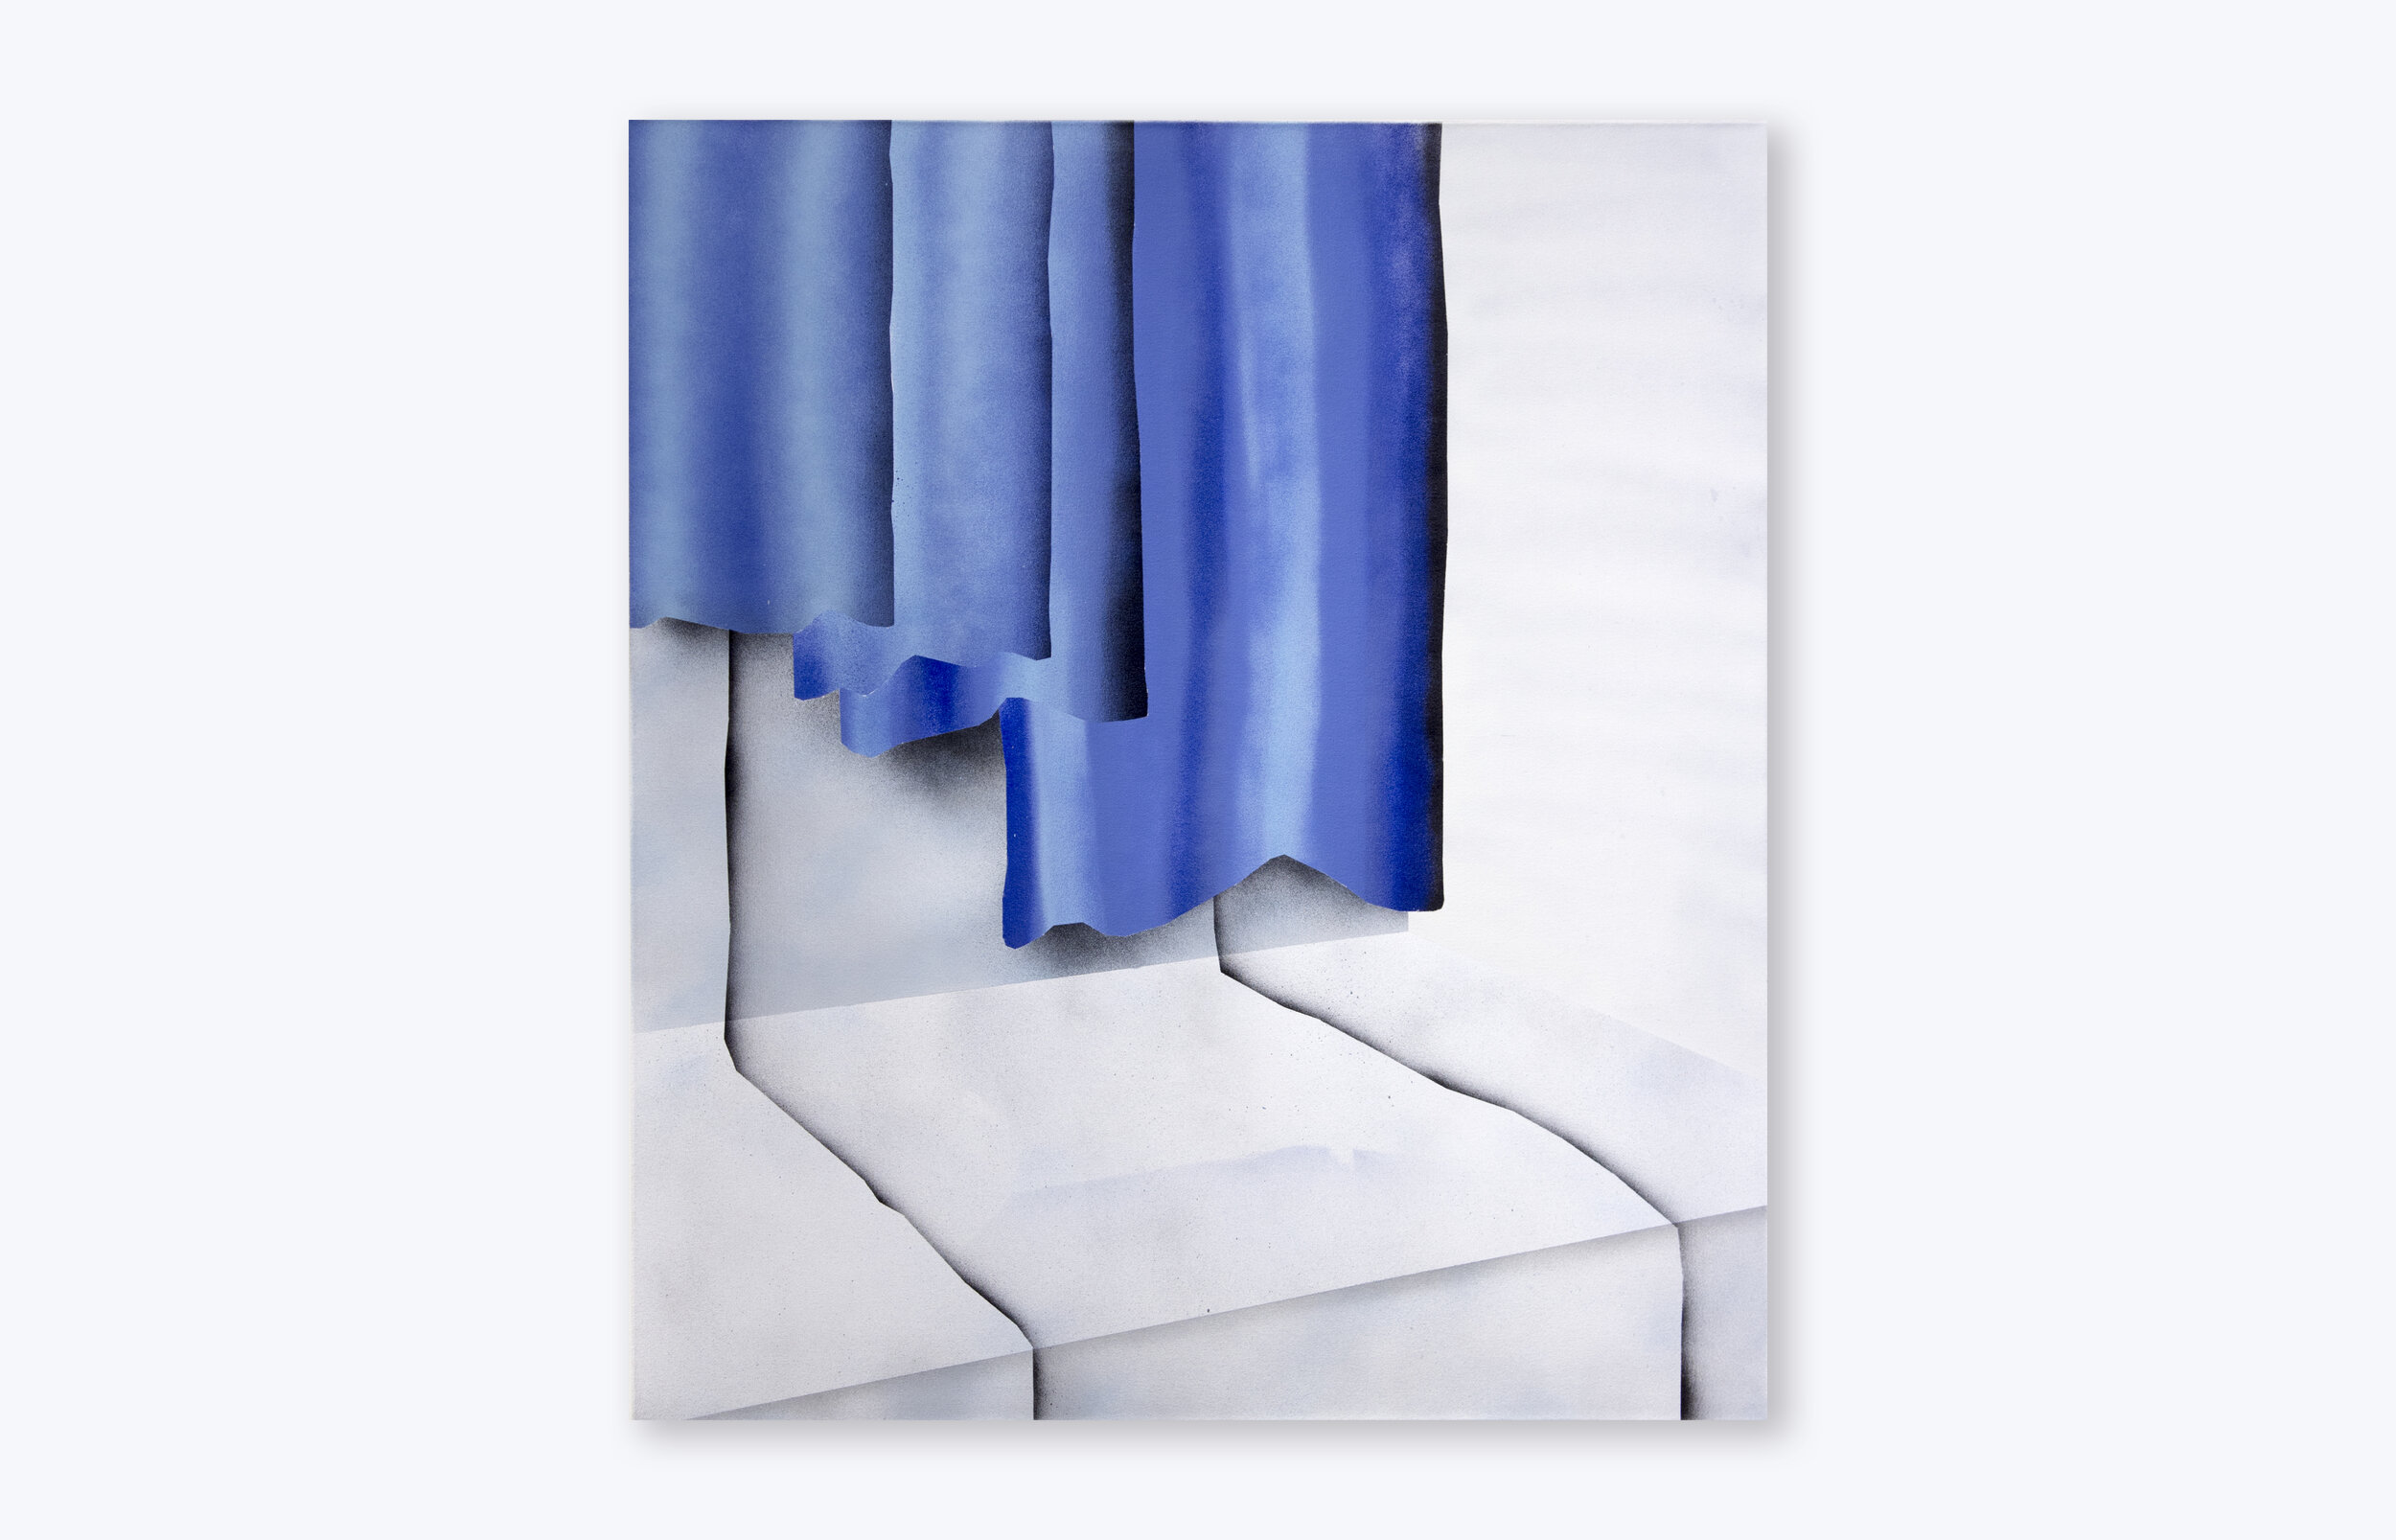  Corner. Acrylic on canvas, 42 x 48”. 2017. 